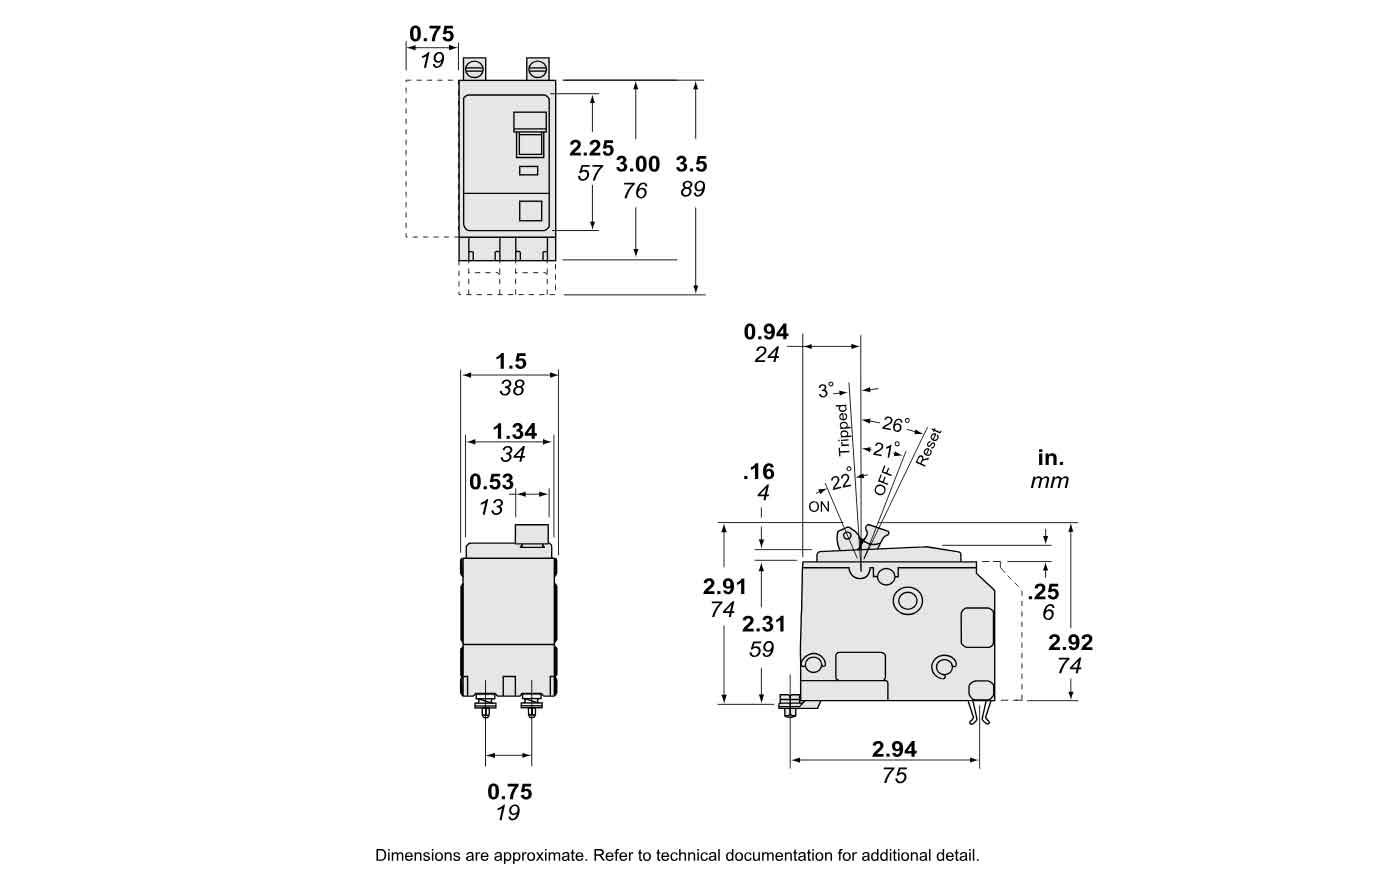 QOB2201021 - Square D - Molded Case Circuit Breaker